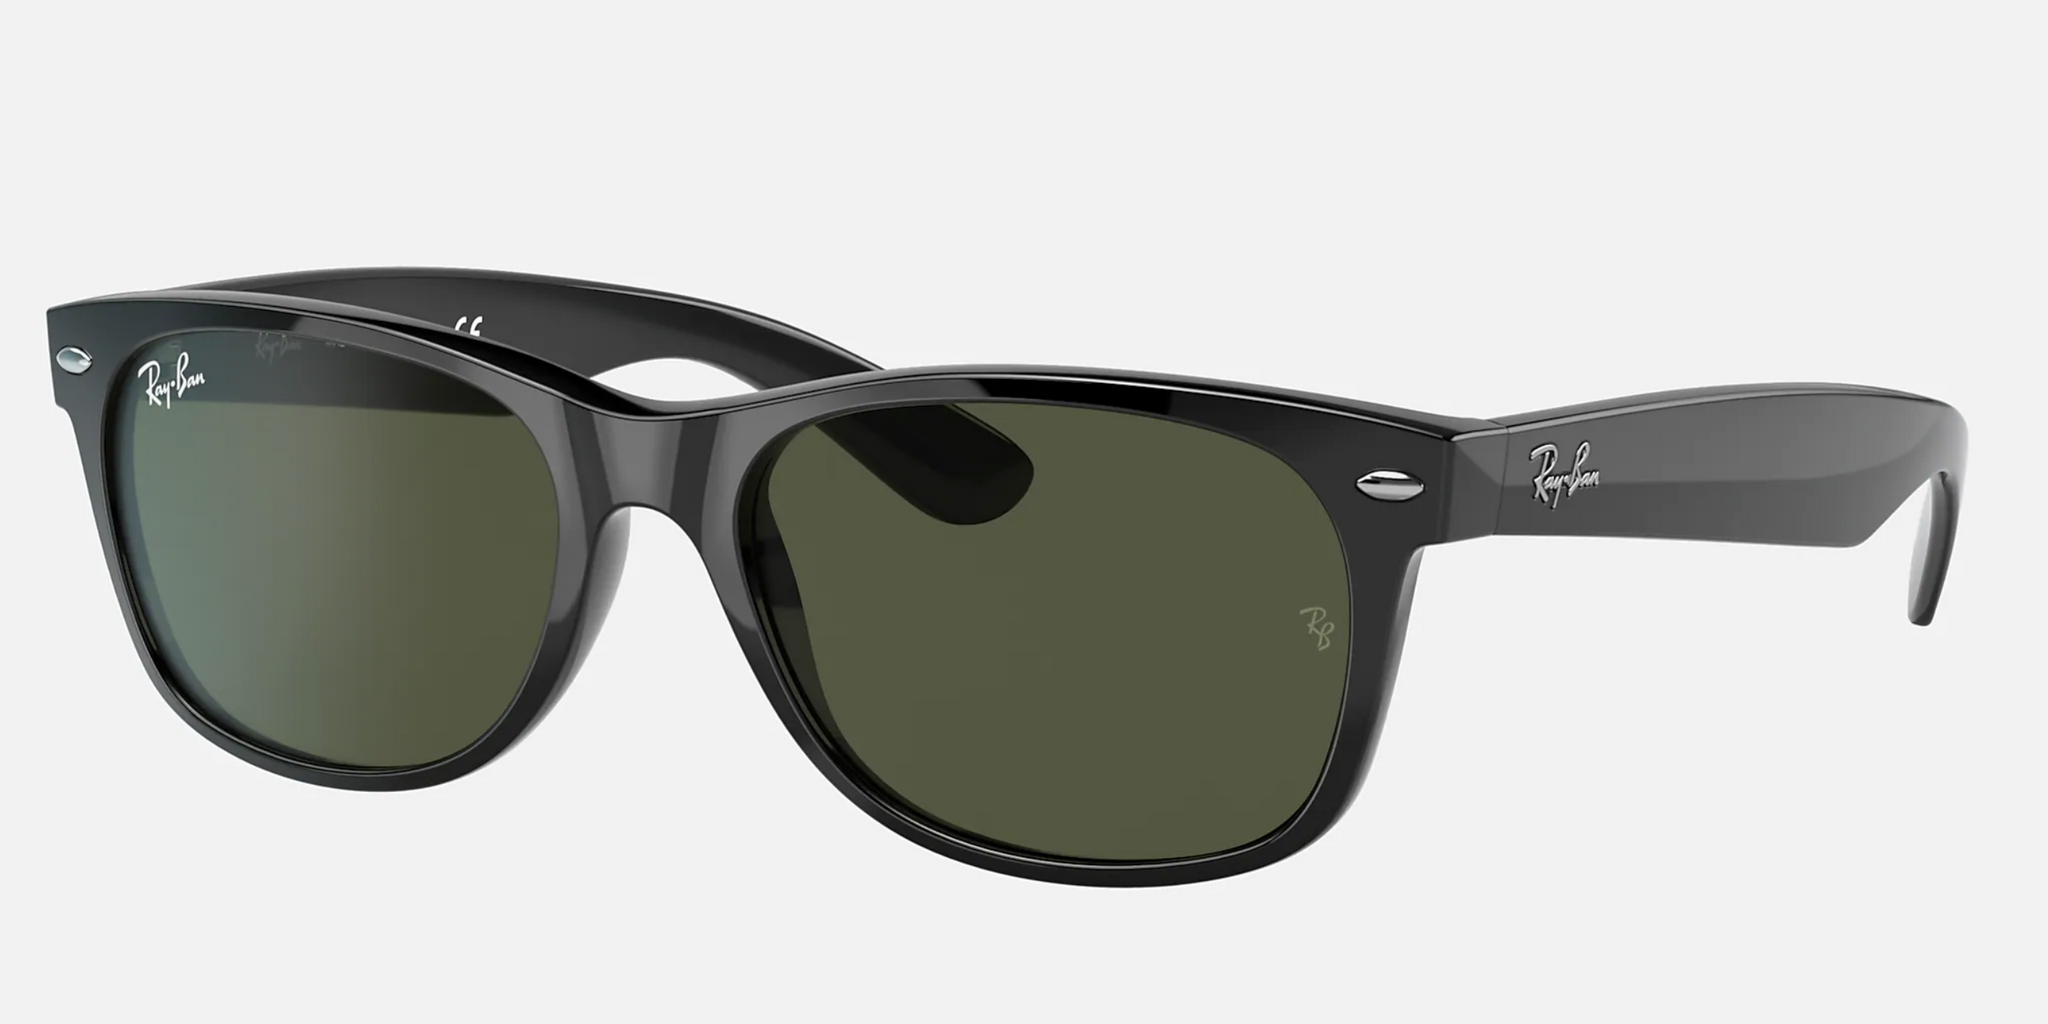 Monet Montgomery Aankoop Ray-Ban New Wayfarer Black Classic Sunglasses RB2132 - Flight Sunglasses